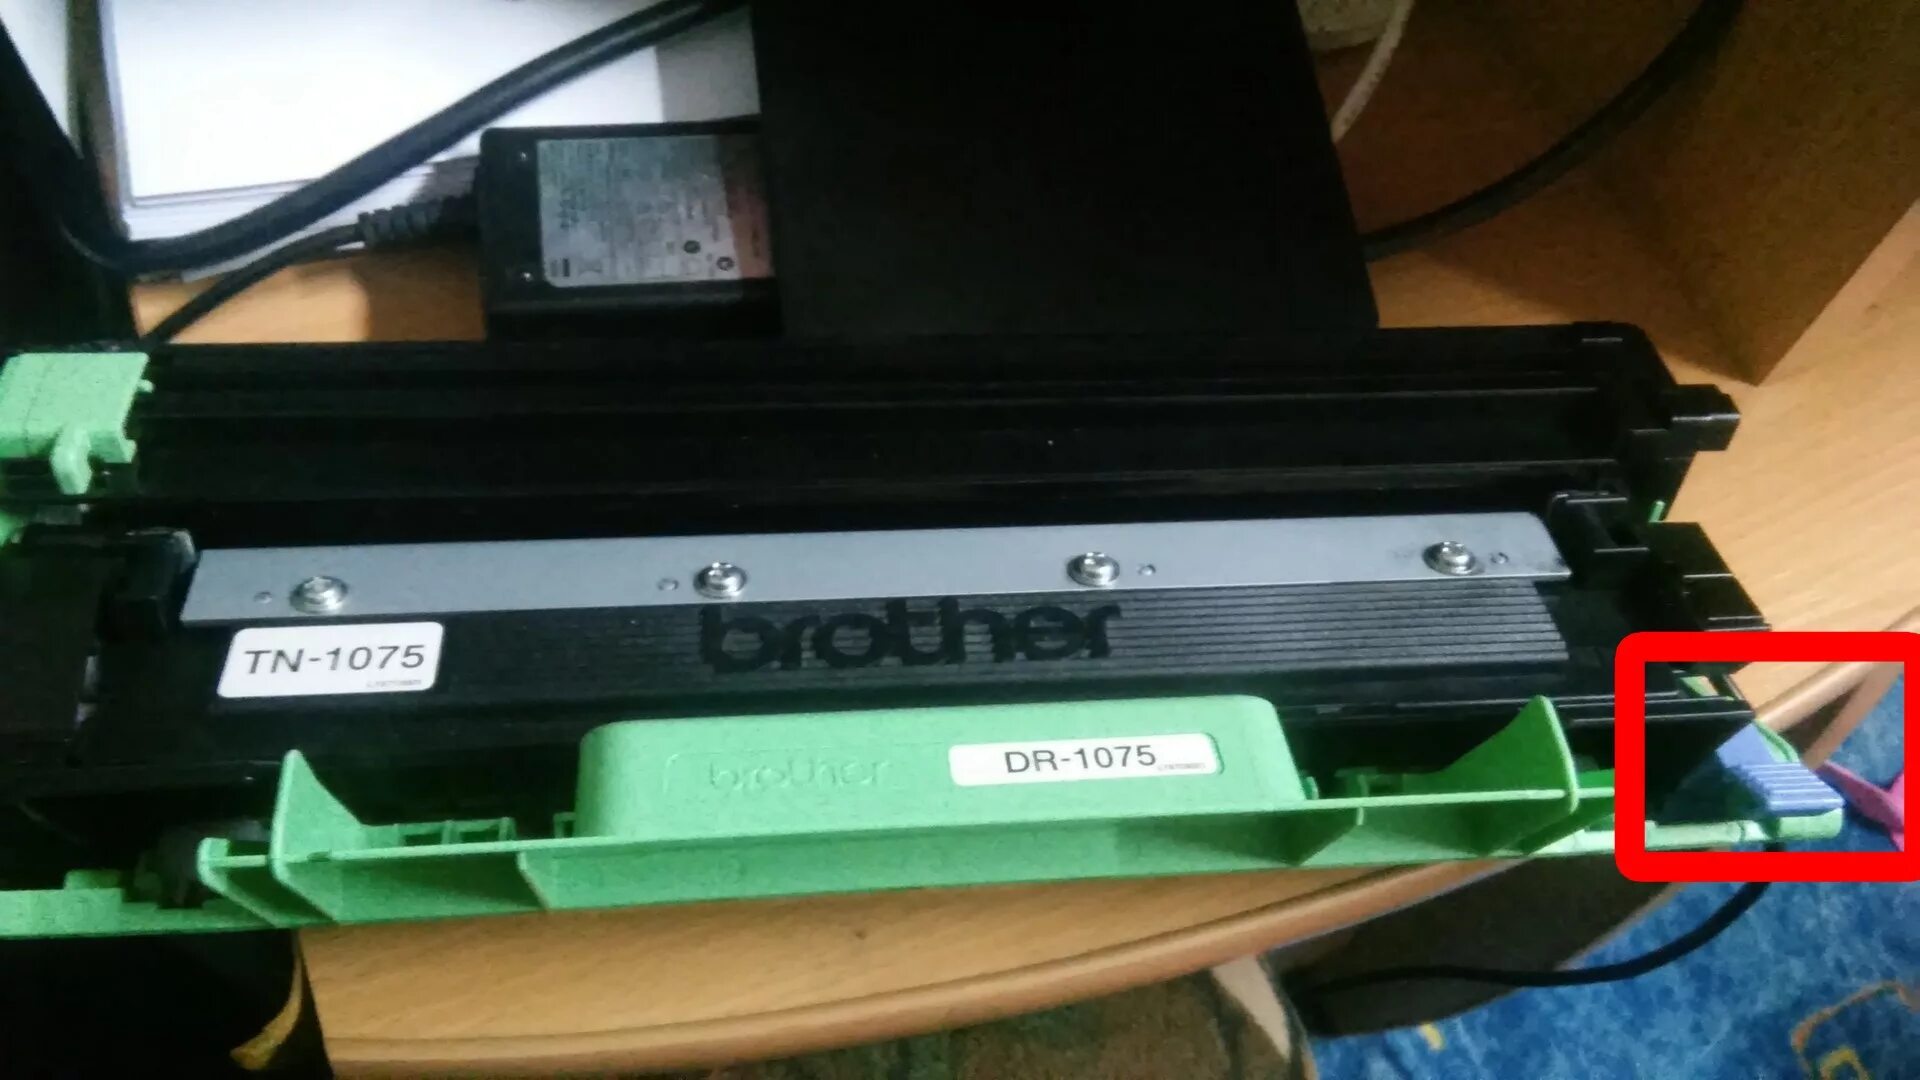 DCP-1510r картридж. Картридж для принтера brother DCP. Brother DCP 1510r кулер. Brother 1510 привод картриджа.